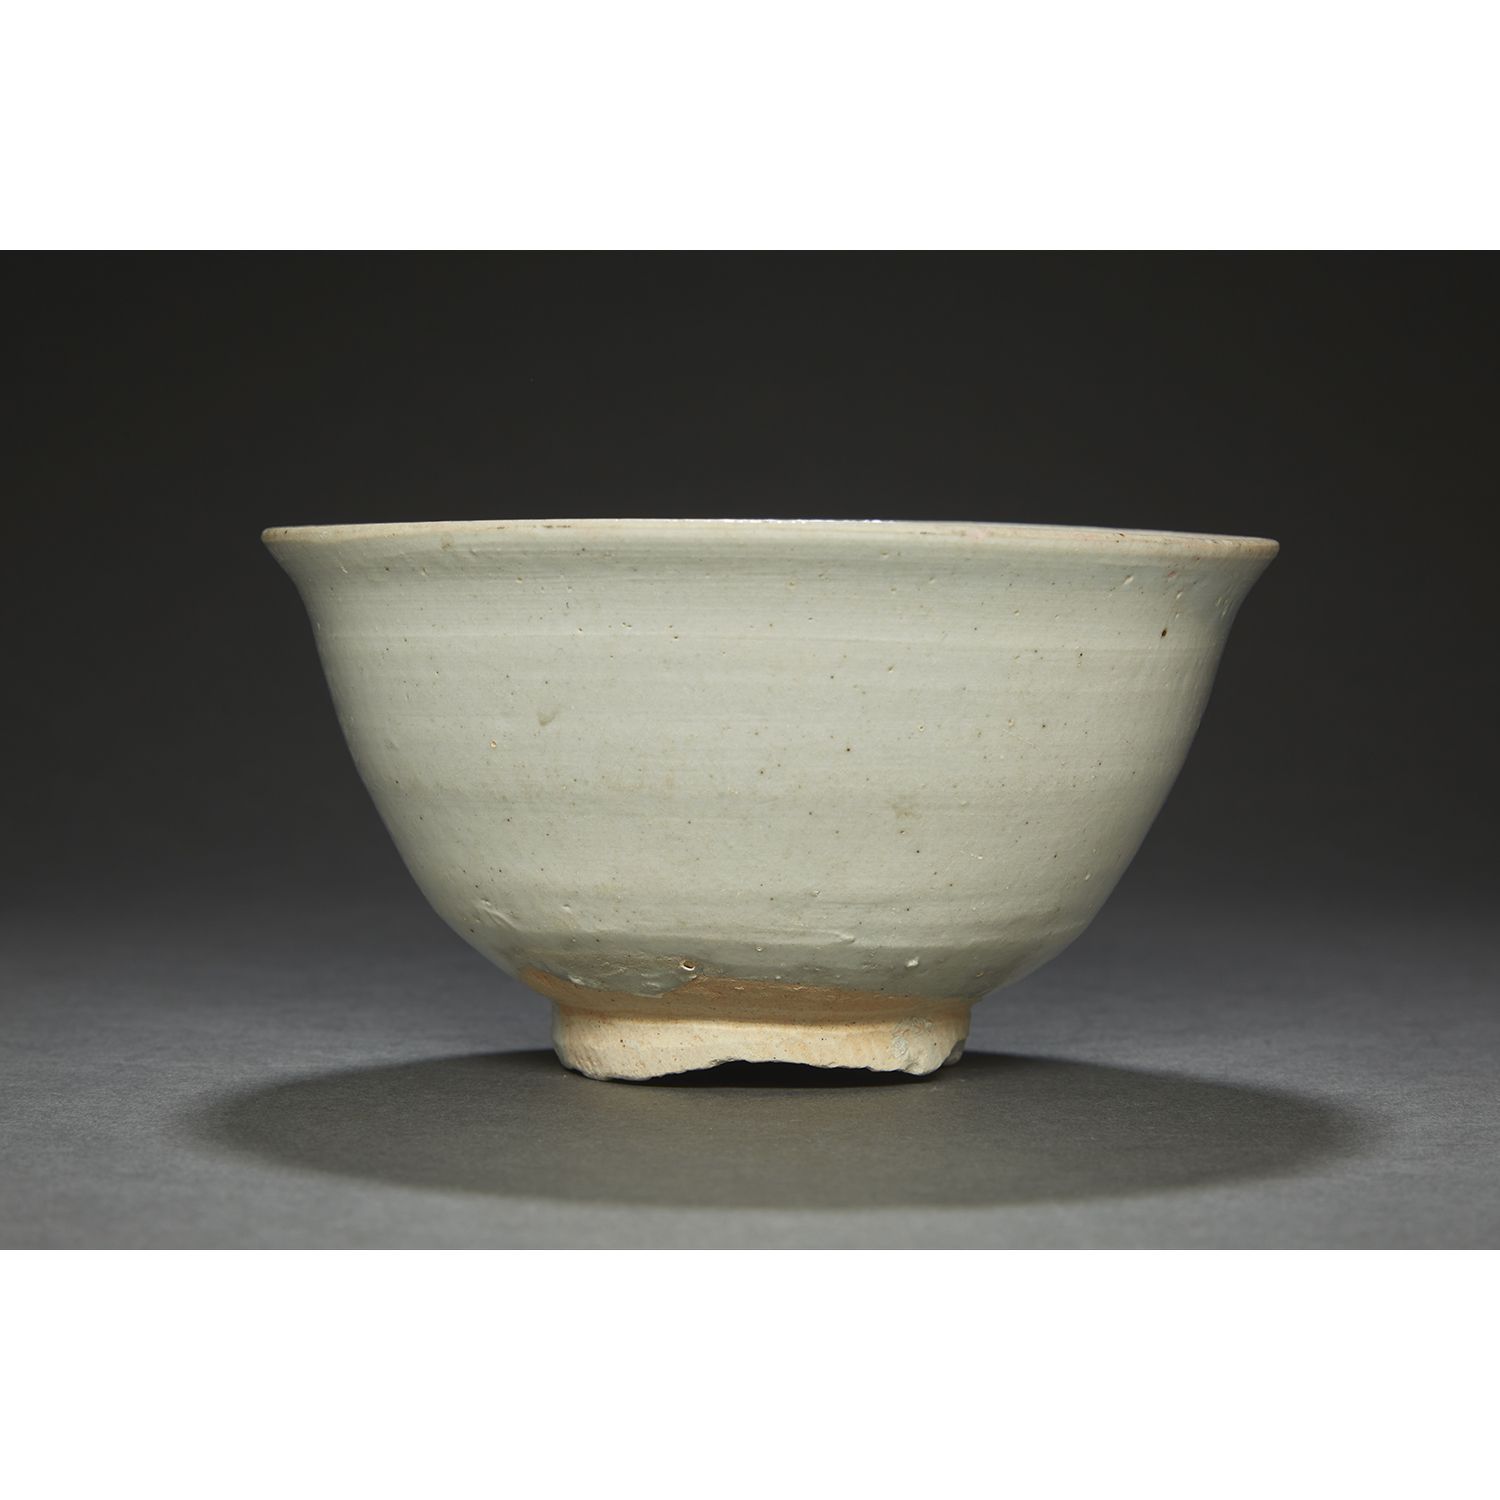 Null 瓷器和白搪瓷碗
。
 （裂缝贯穿，有缺口）。
韩国，朝鲜时代后期。
白釉瓷碗，韩国，晚期选择时期。
DIAM。13,8 cm (6 1/8 in.)